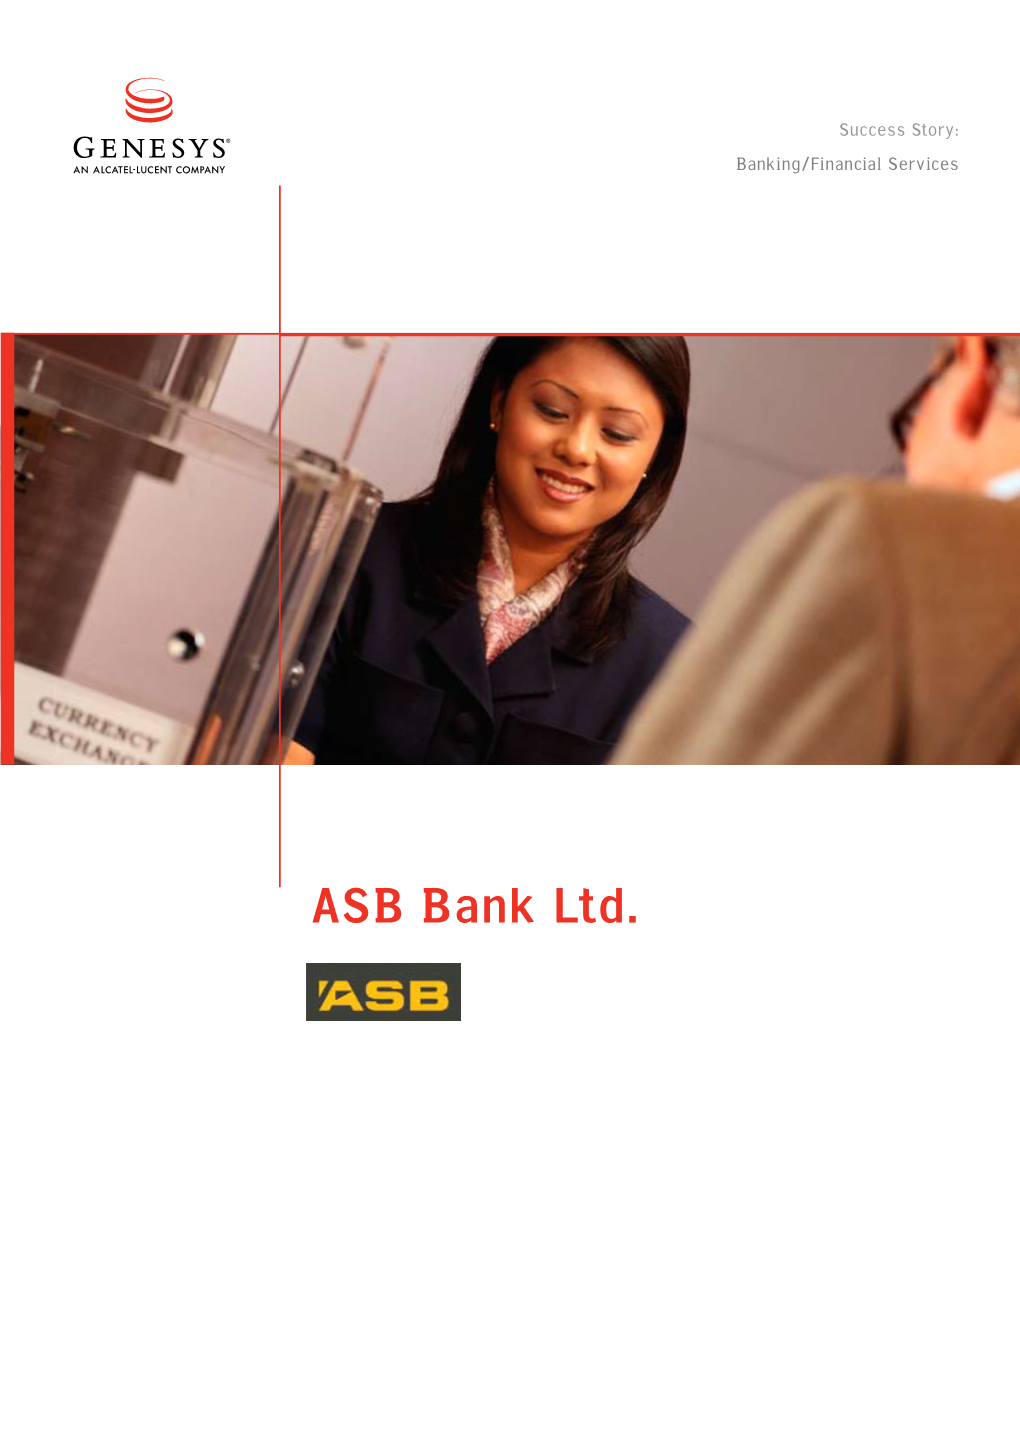 ASB Bank Ltd. Success Story > Banking > ASB Bank Ltd